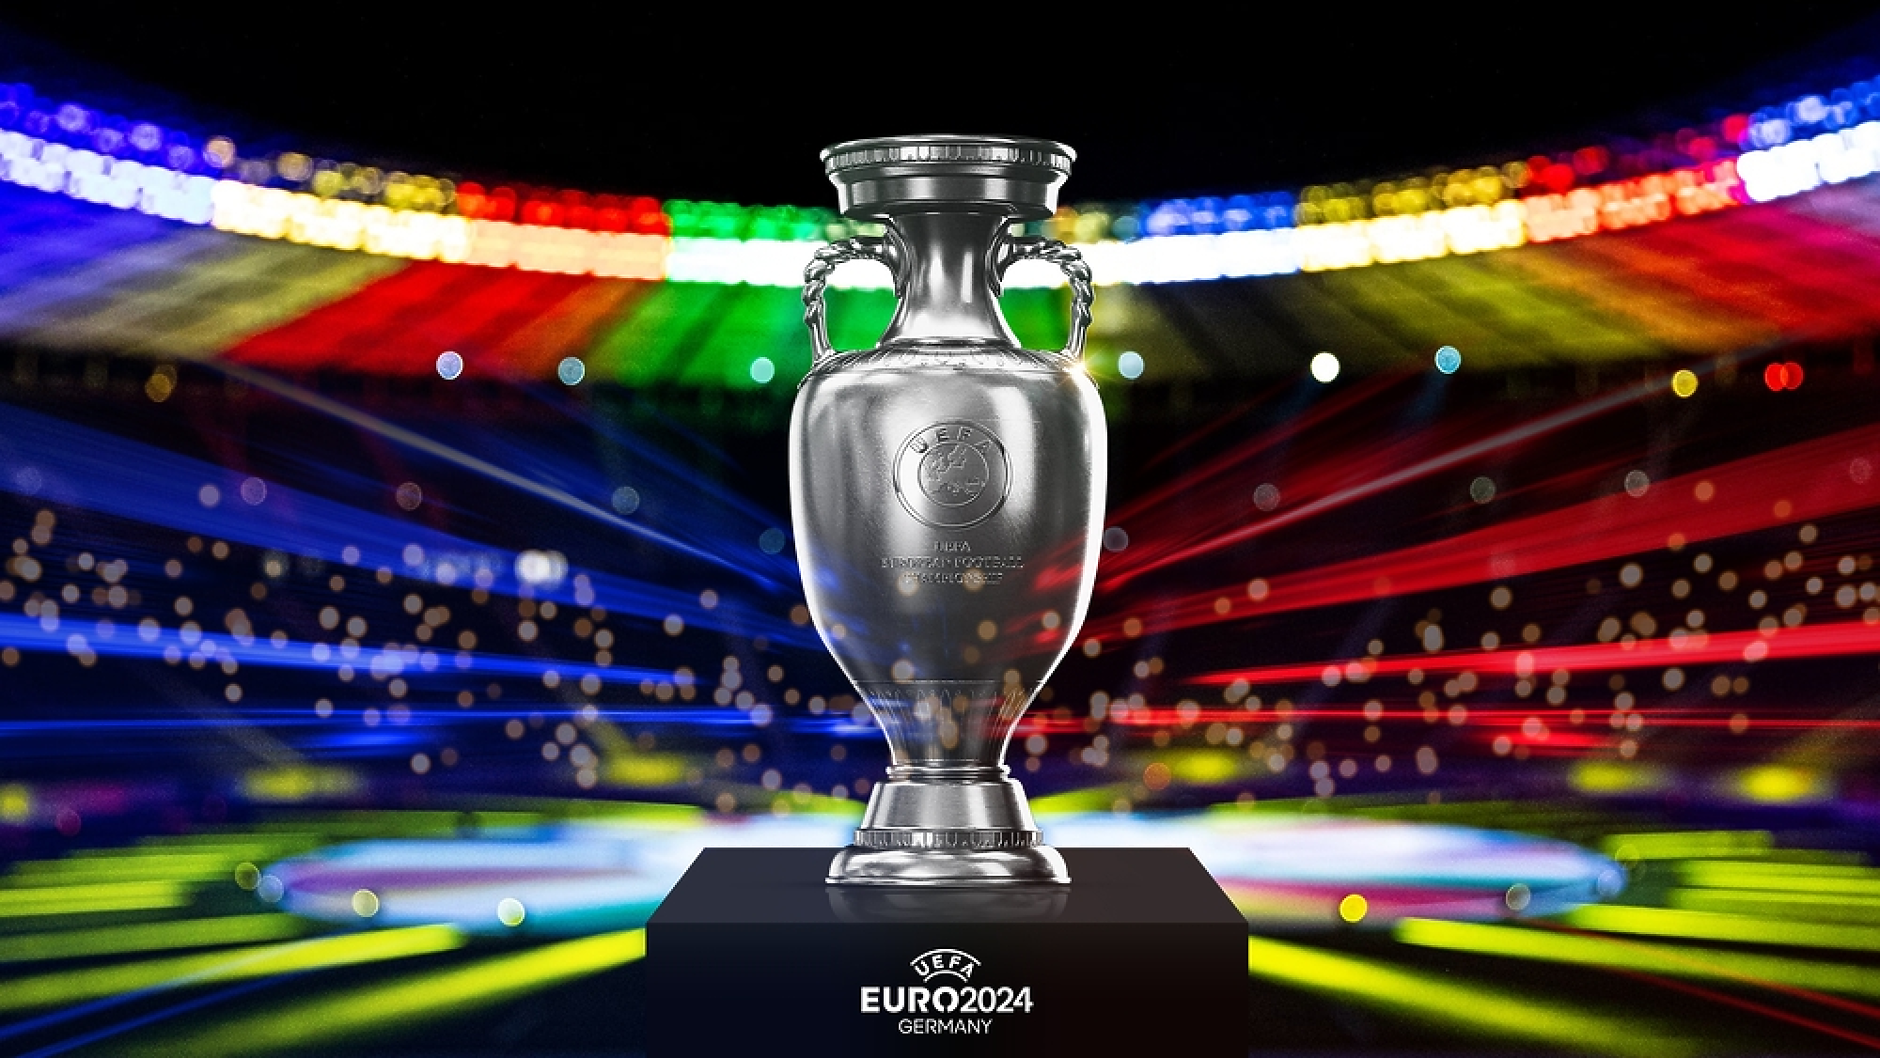  Евро 2024  счупи куп рекорди  още в груповата фаза 